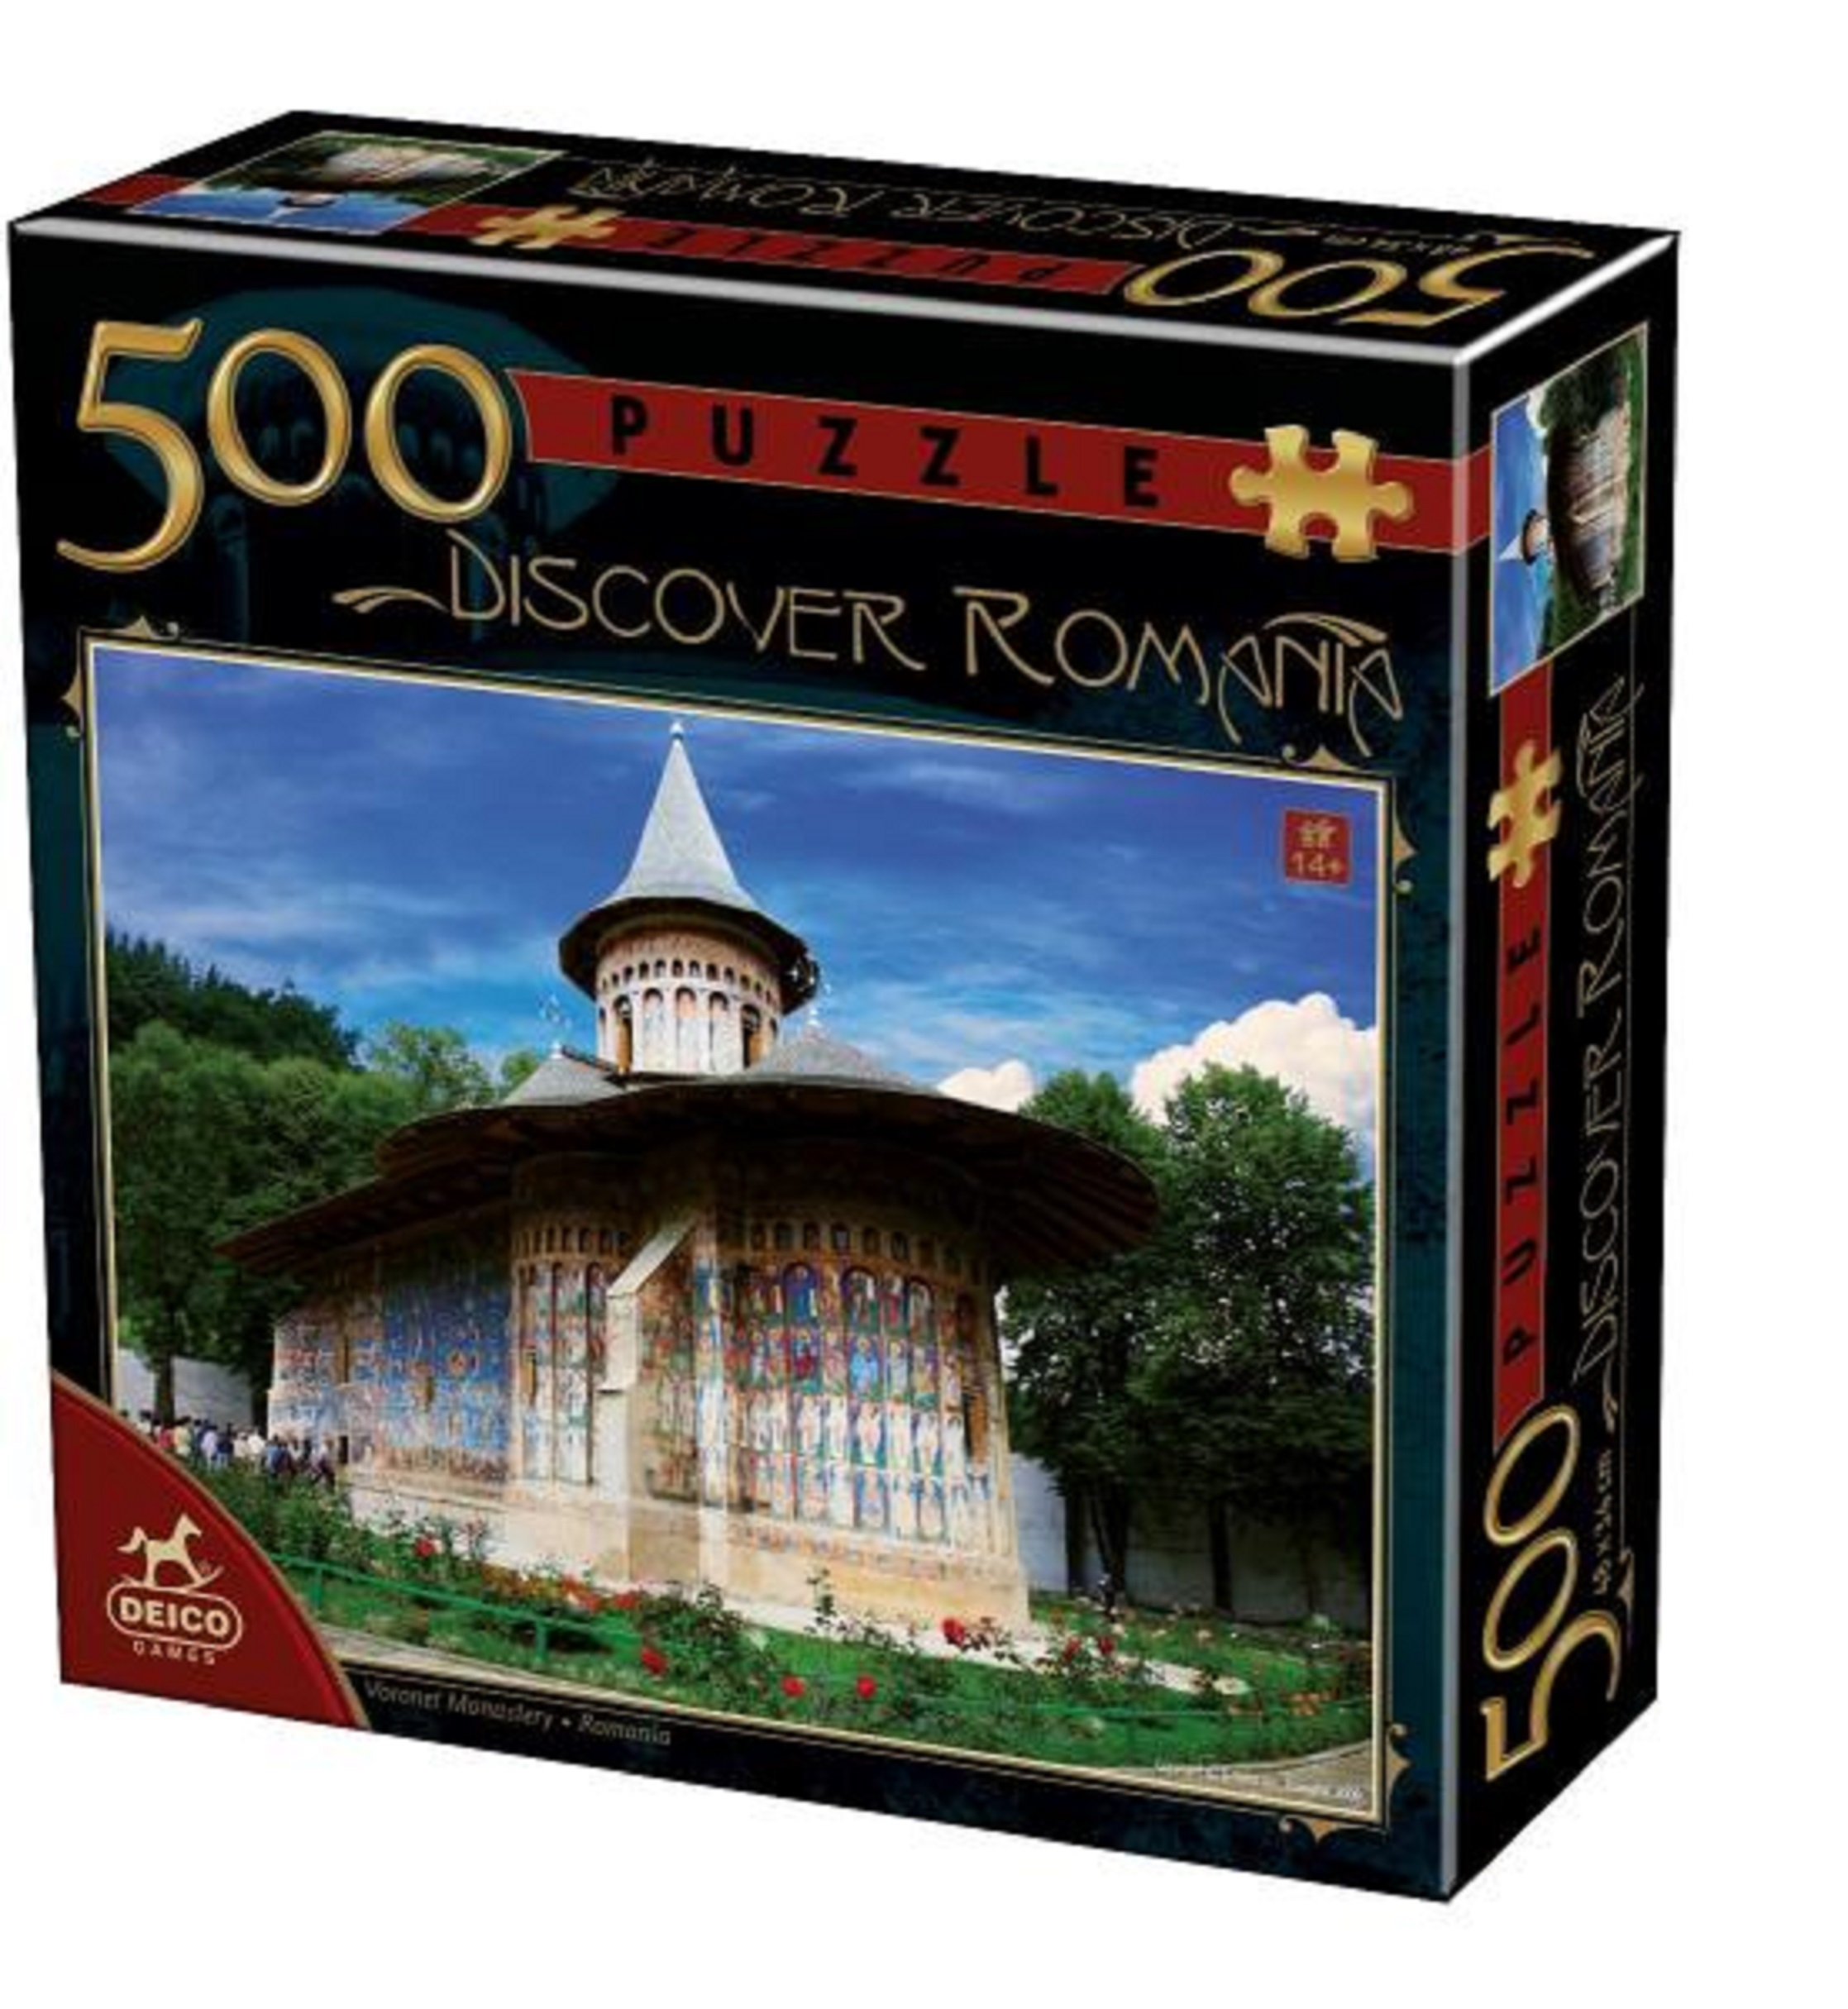 Puzzle - Discover Romania - Manastirea Voronet - 500 piese | Deico Games - 1